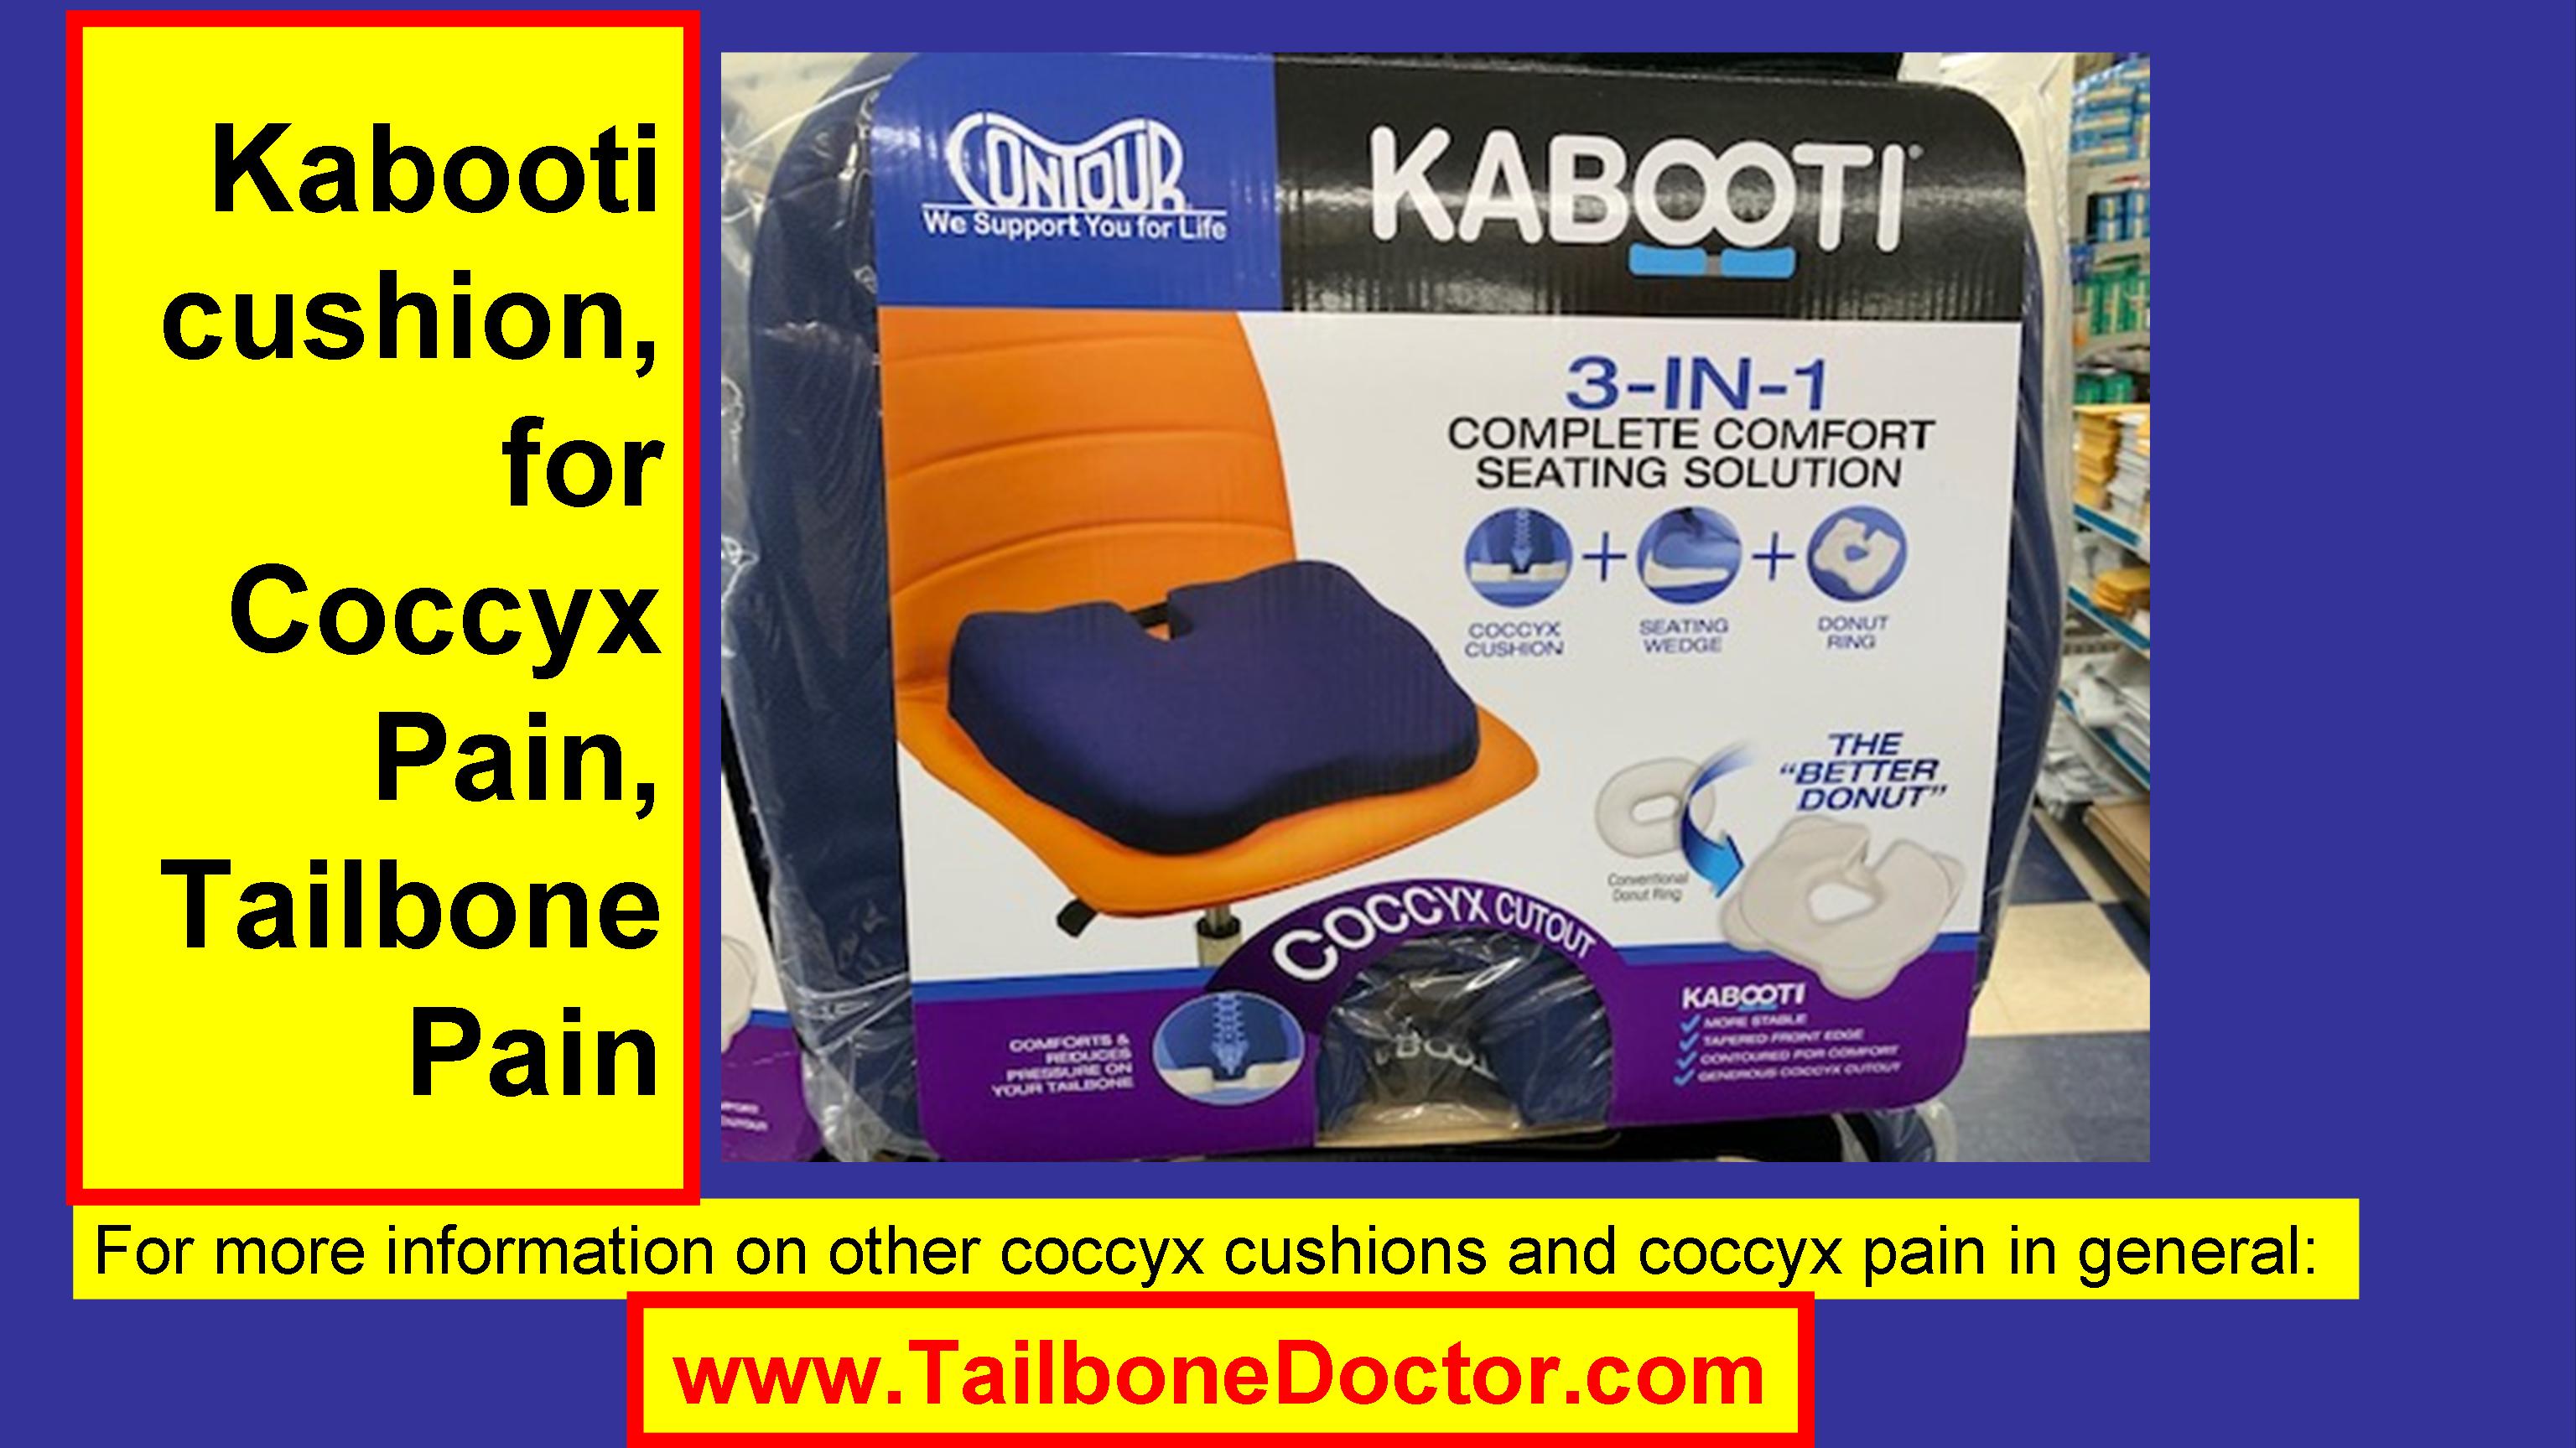 https://tailbonedoctor.com/wp-content/uploads/2019/04/Kabooti-cushion-for-Coccyx-Pain-Tailbone-Pain.jpg